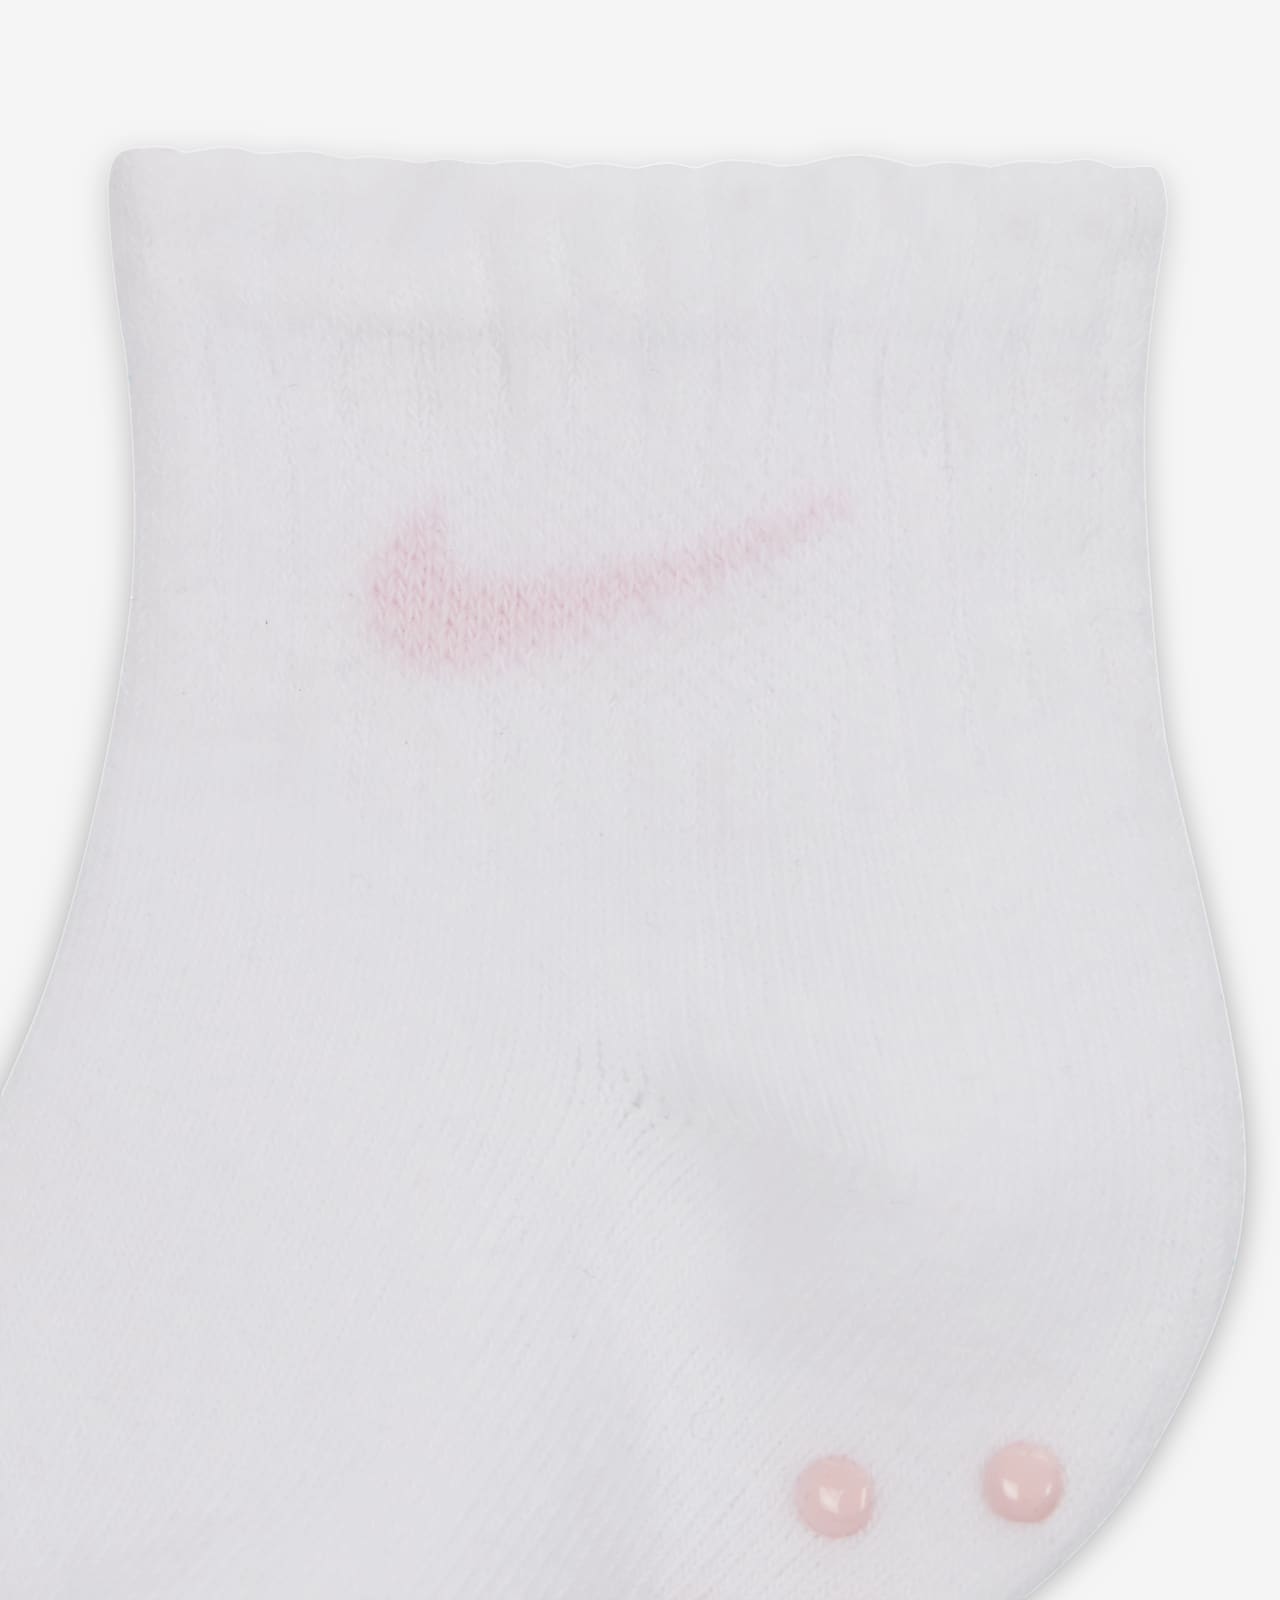 Nike Core Swoosh Baby (6-12M) Gripper Socks Box Set (3 Pairs).